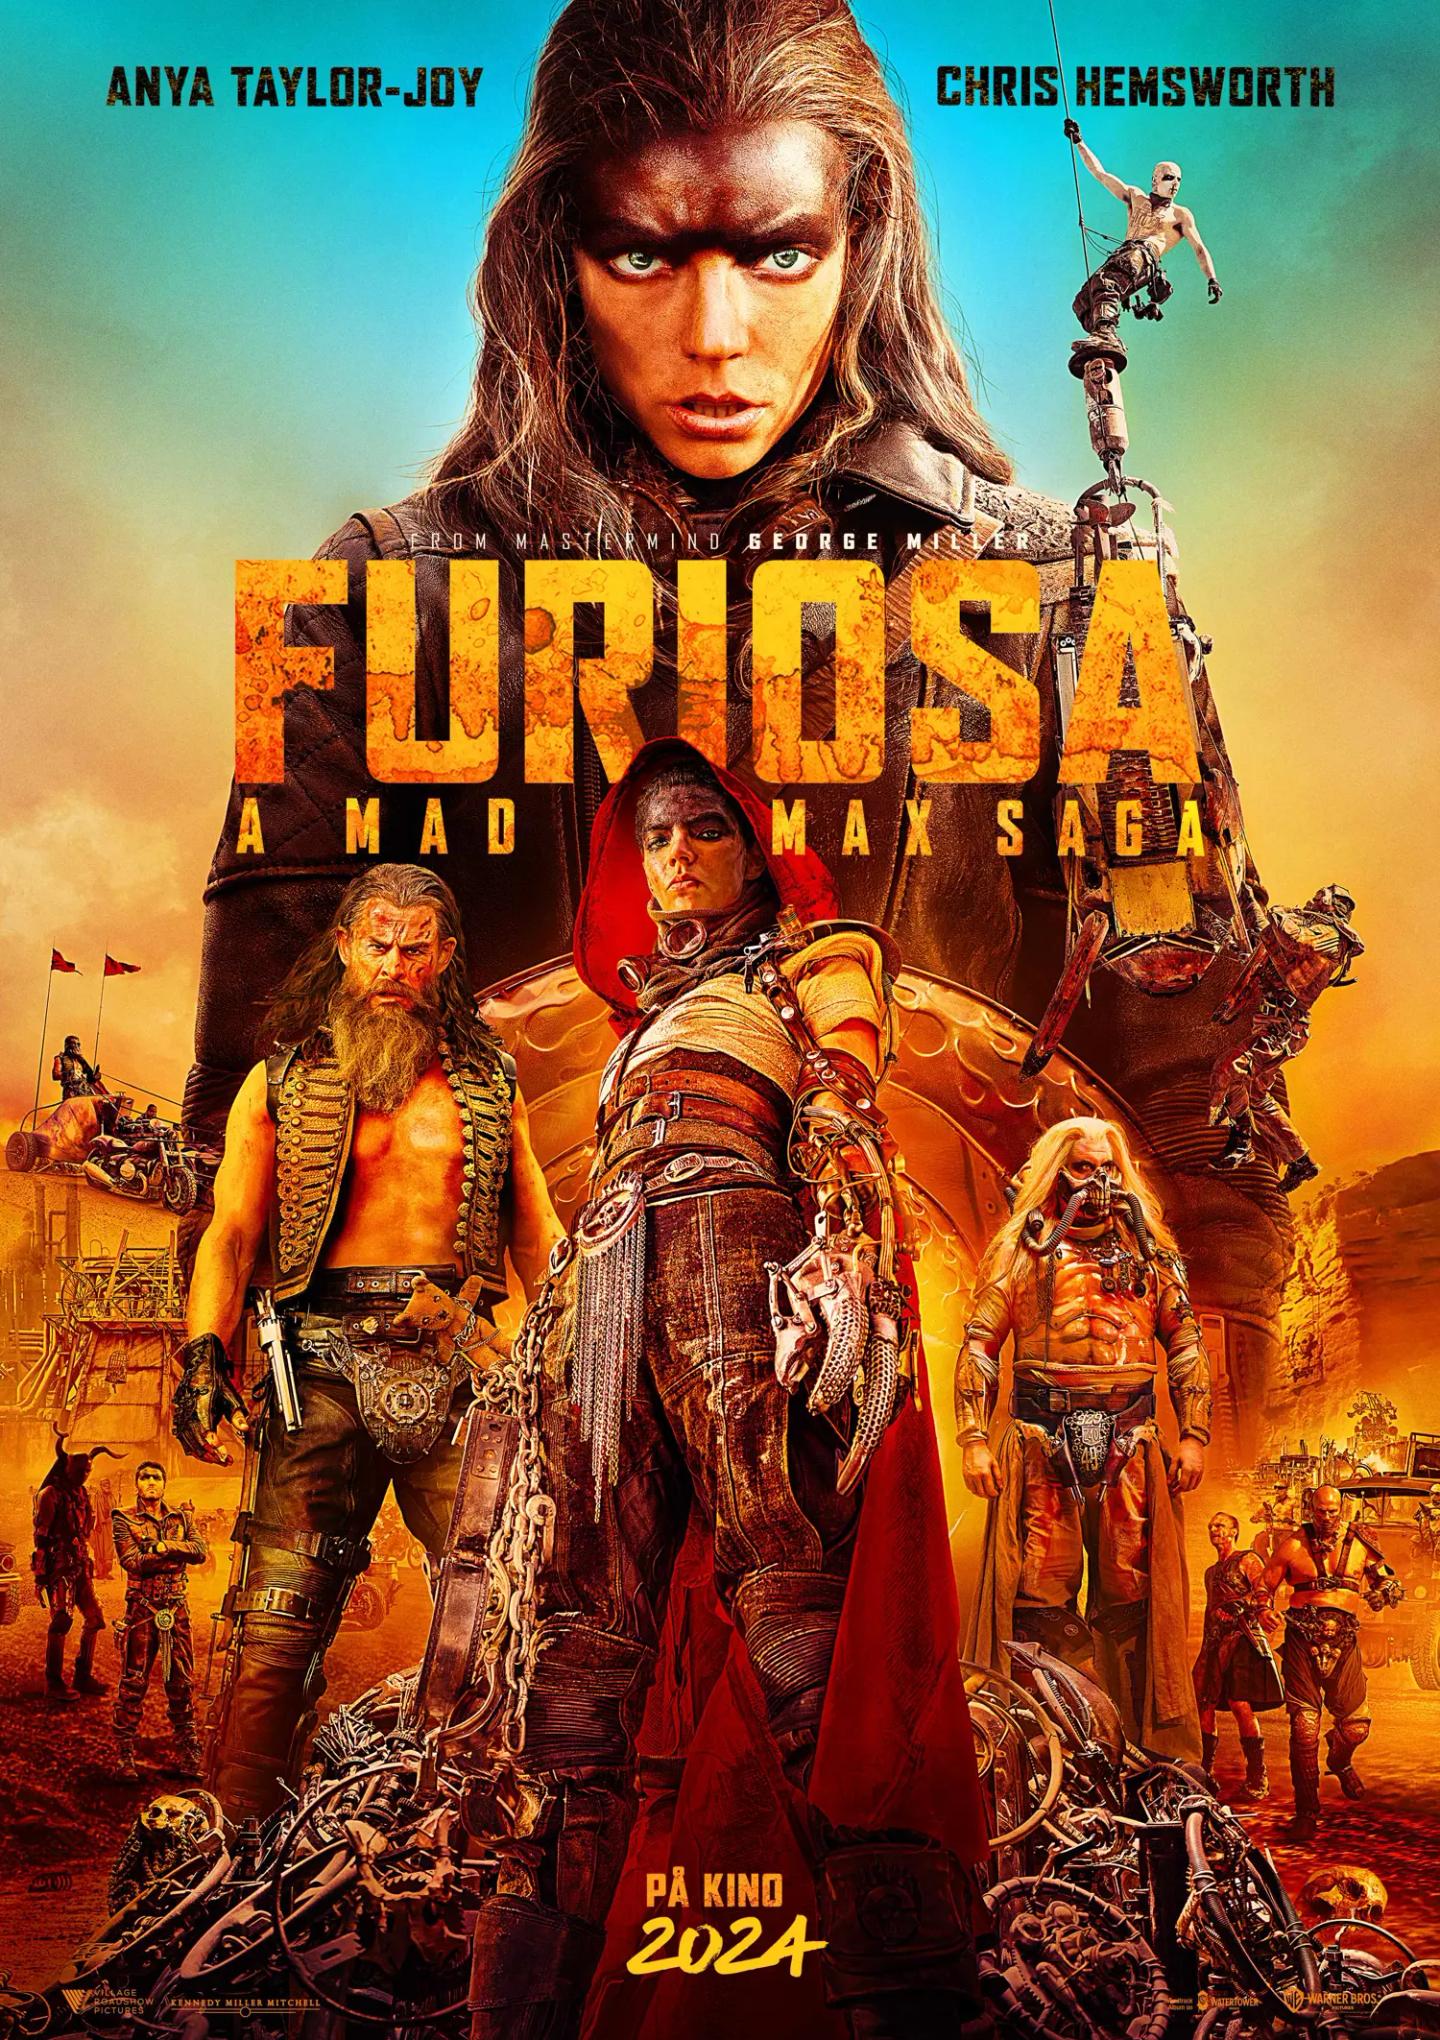 Plakat for 'Furiosa:  A Mad Max Saga'